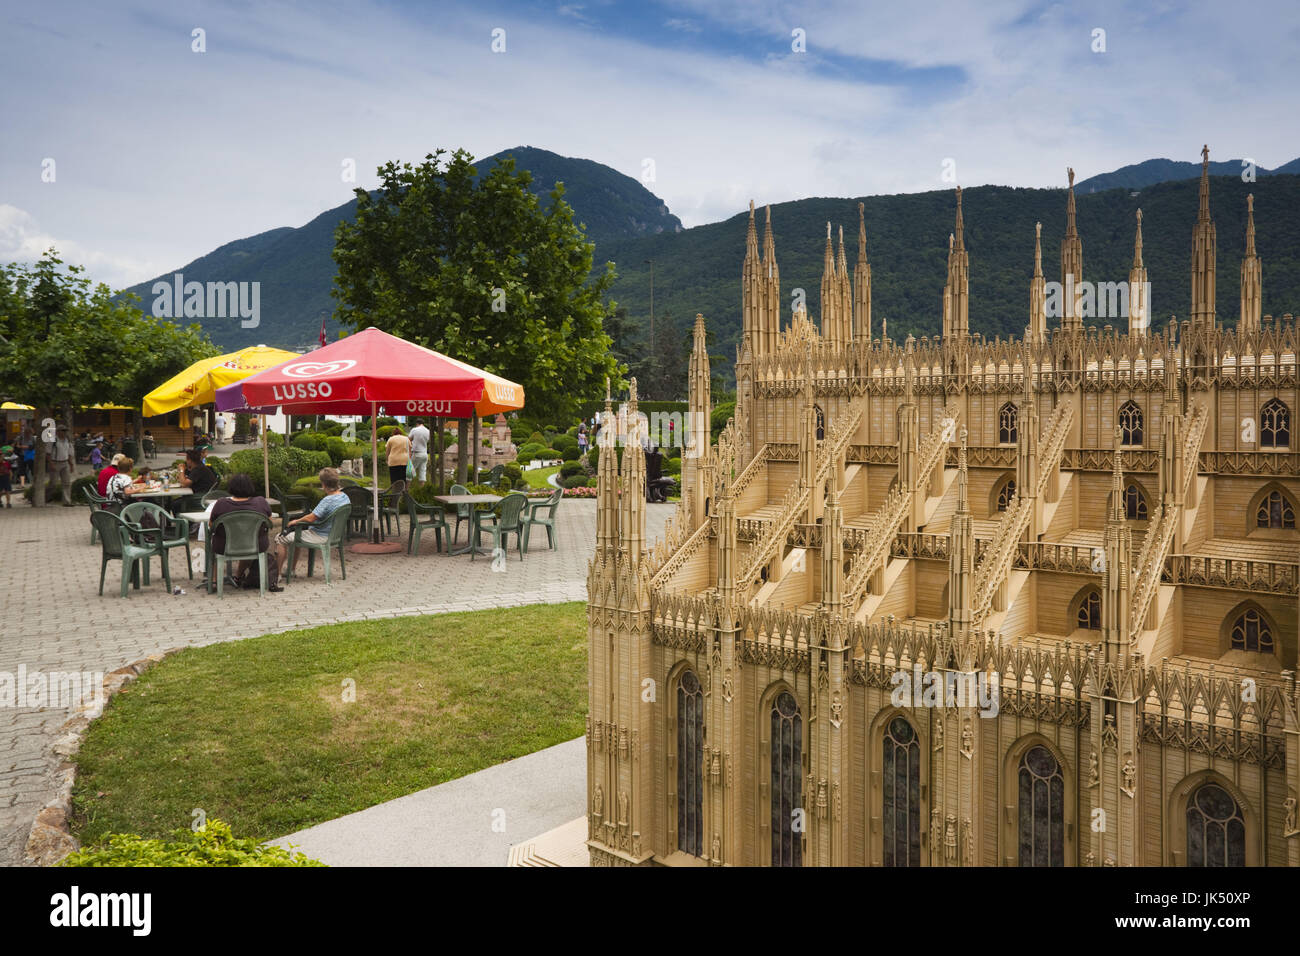 Switzerland, Ticino, Lake Lugano, Melide, Swissminiatur, Miniature Switzerland model theme park, NR Stock Photo